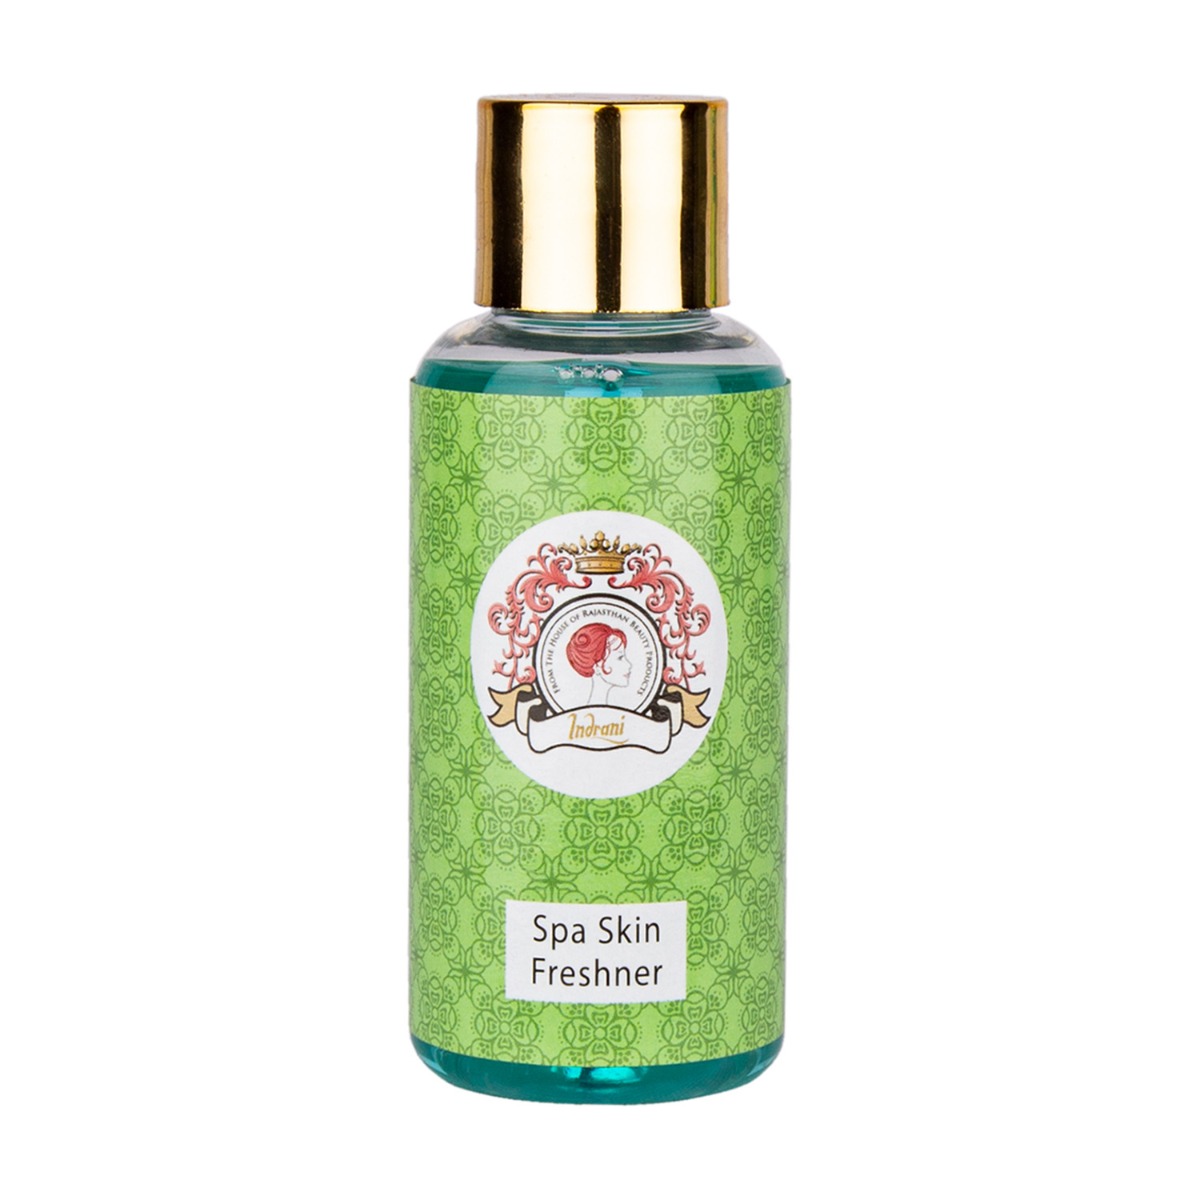 Indrani Spa Skin Freshner, 50ml